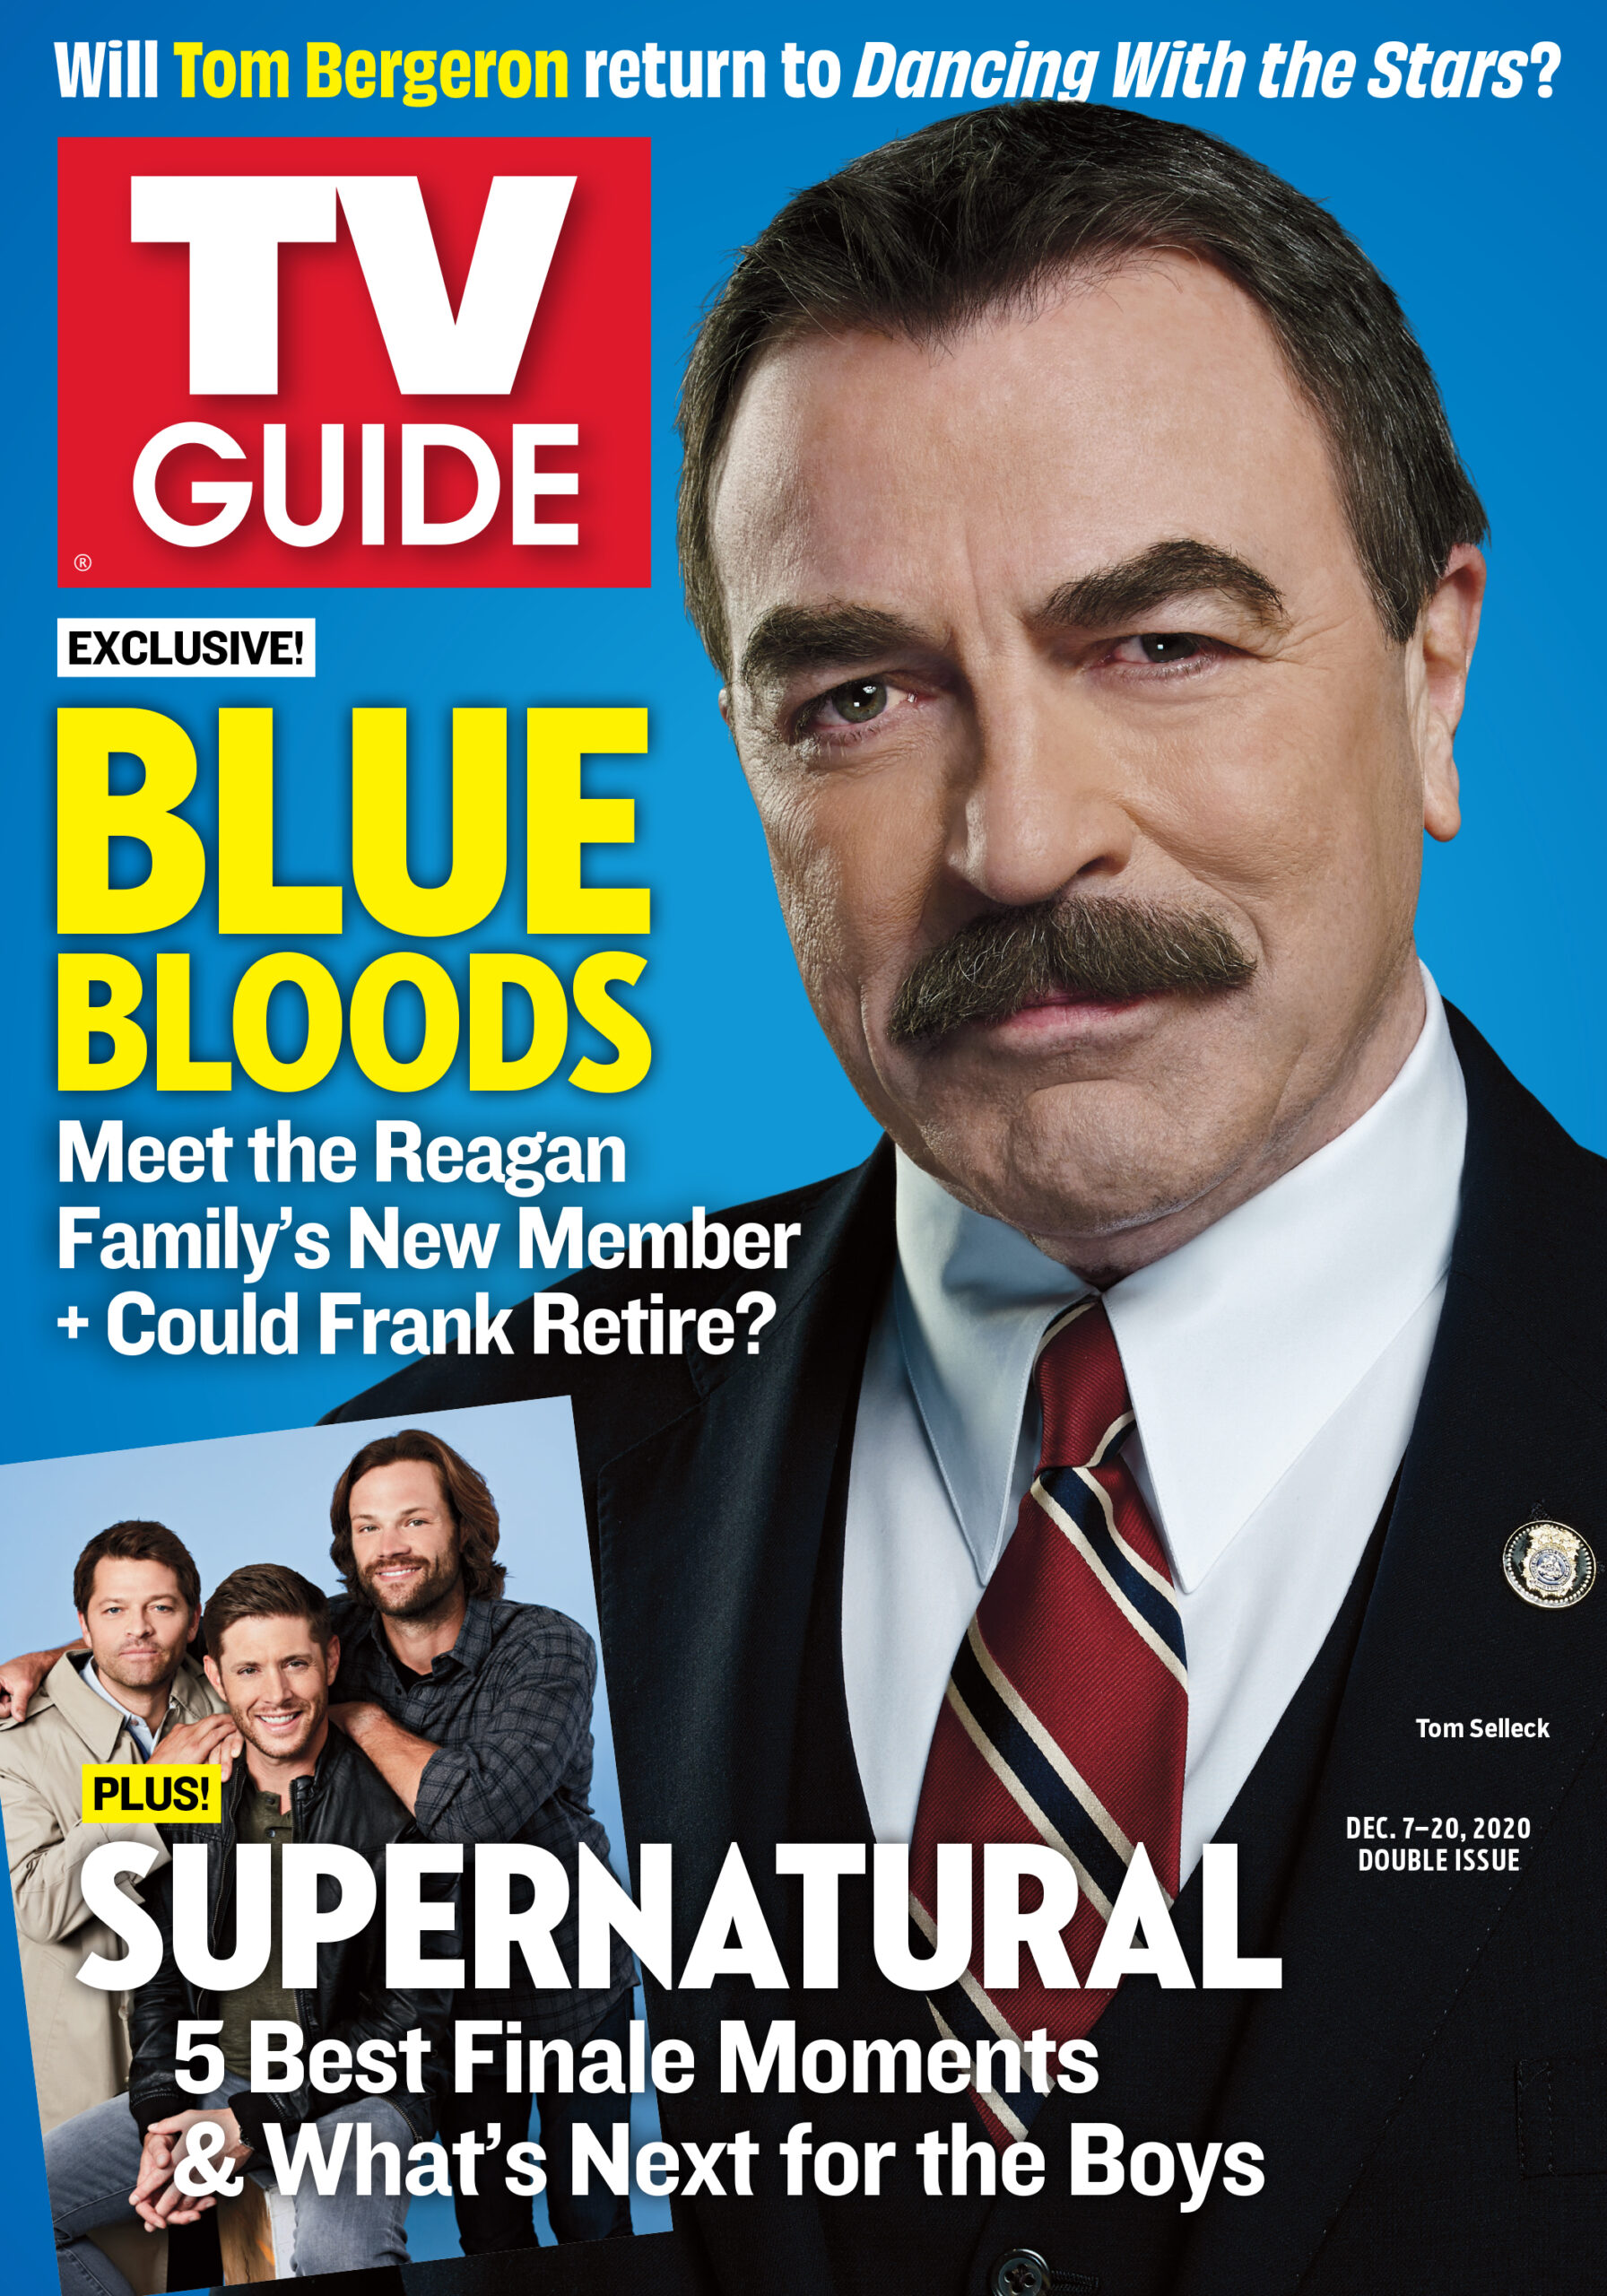 TV Guide - Blue Bloods Cover - December 7, 2020